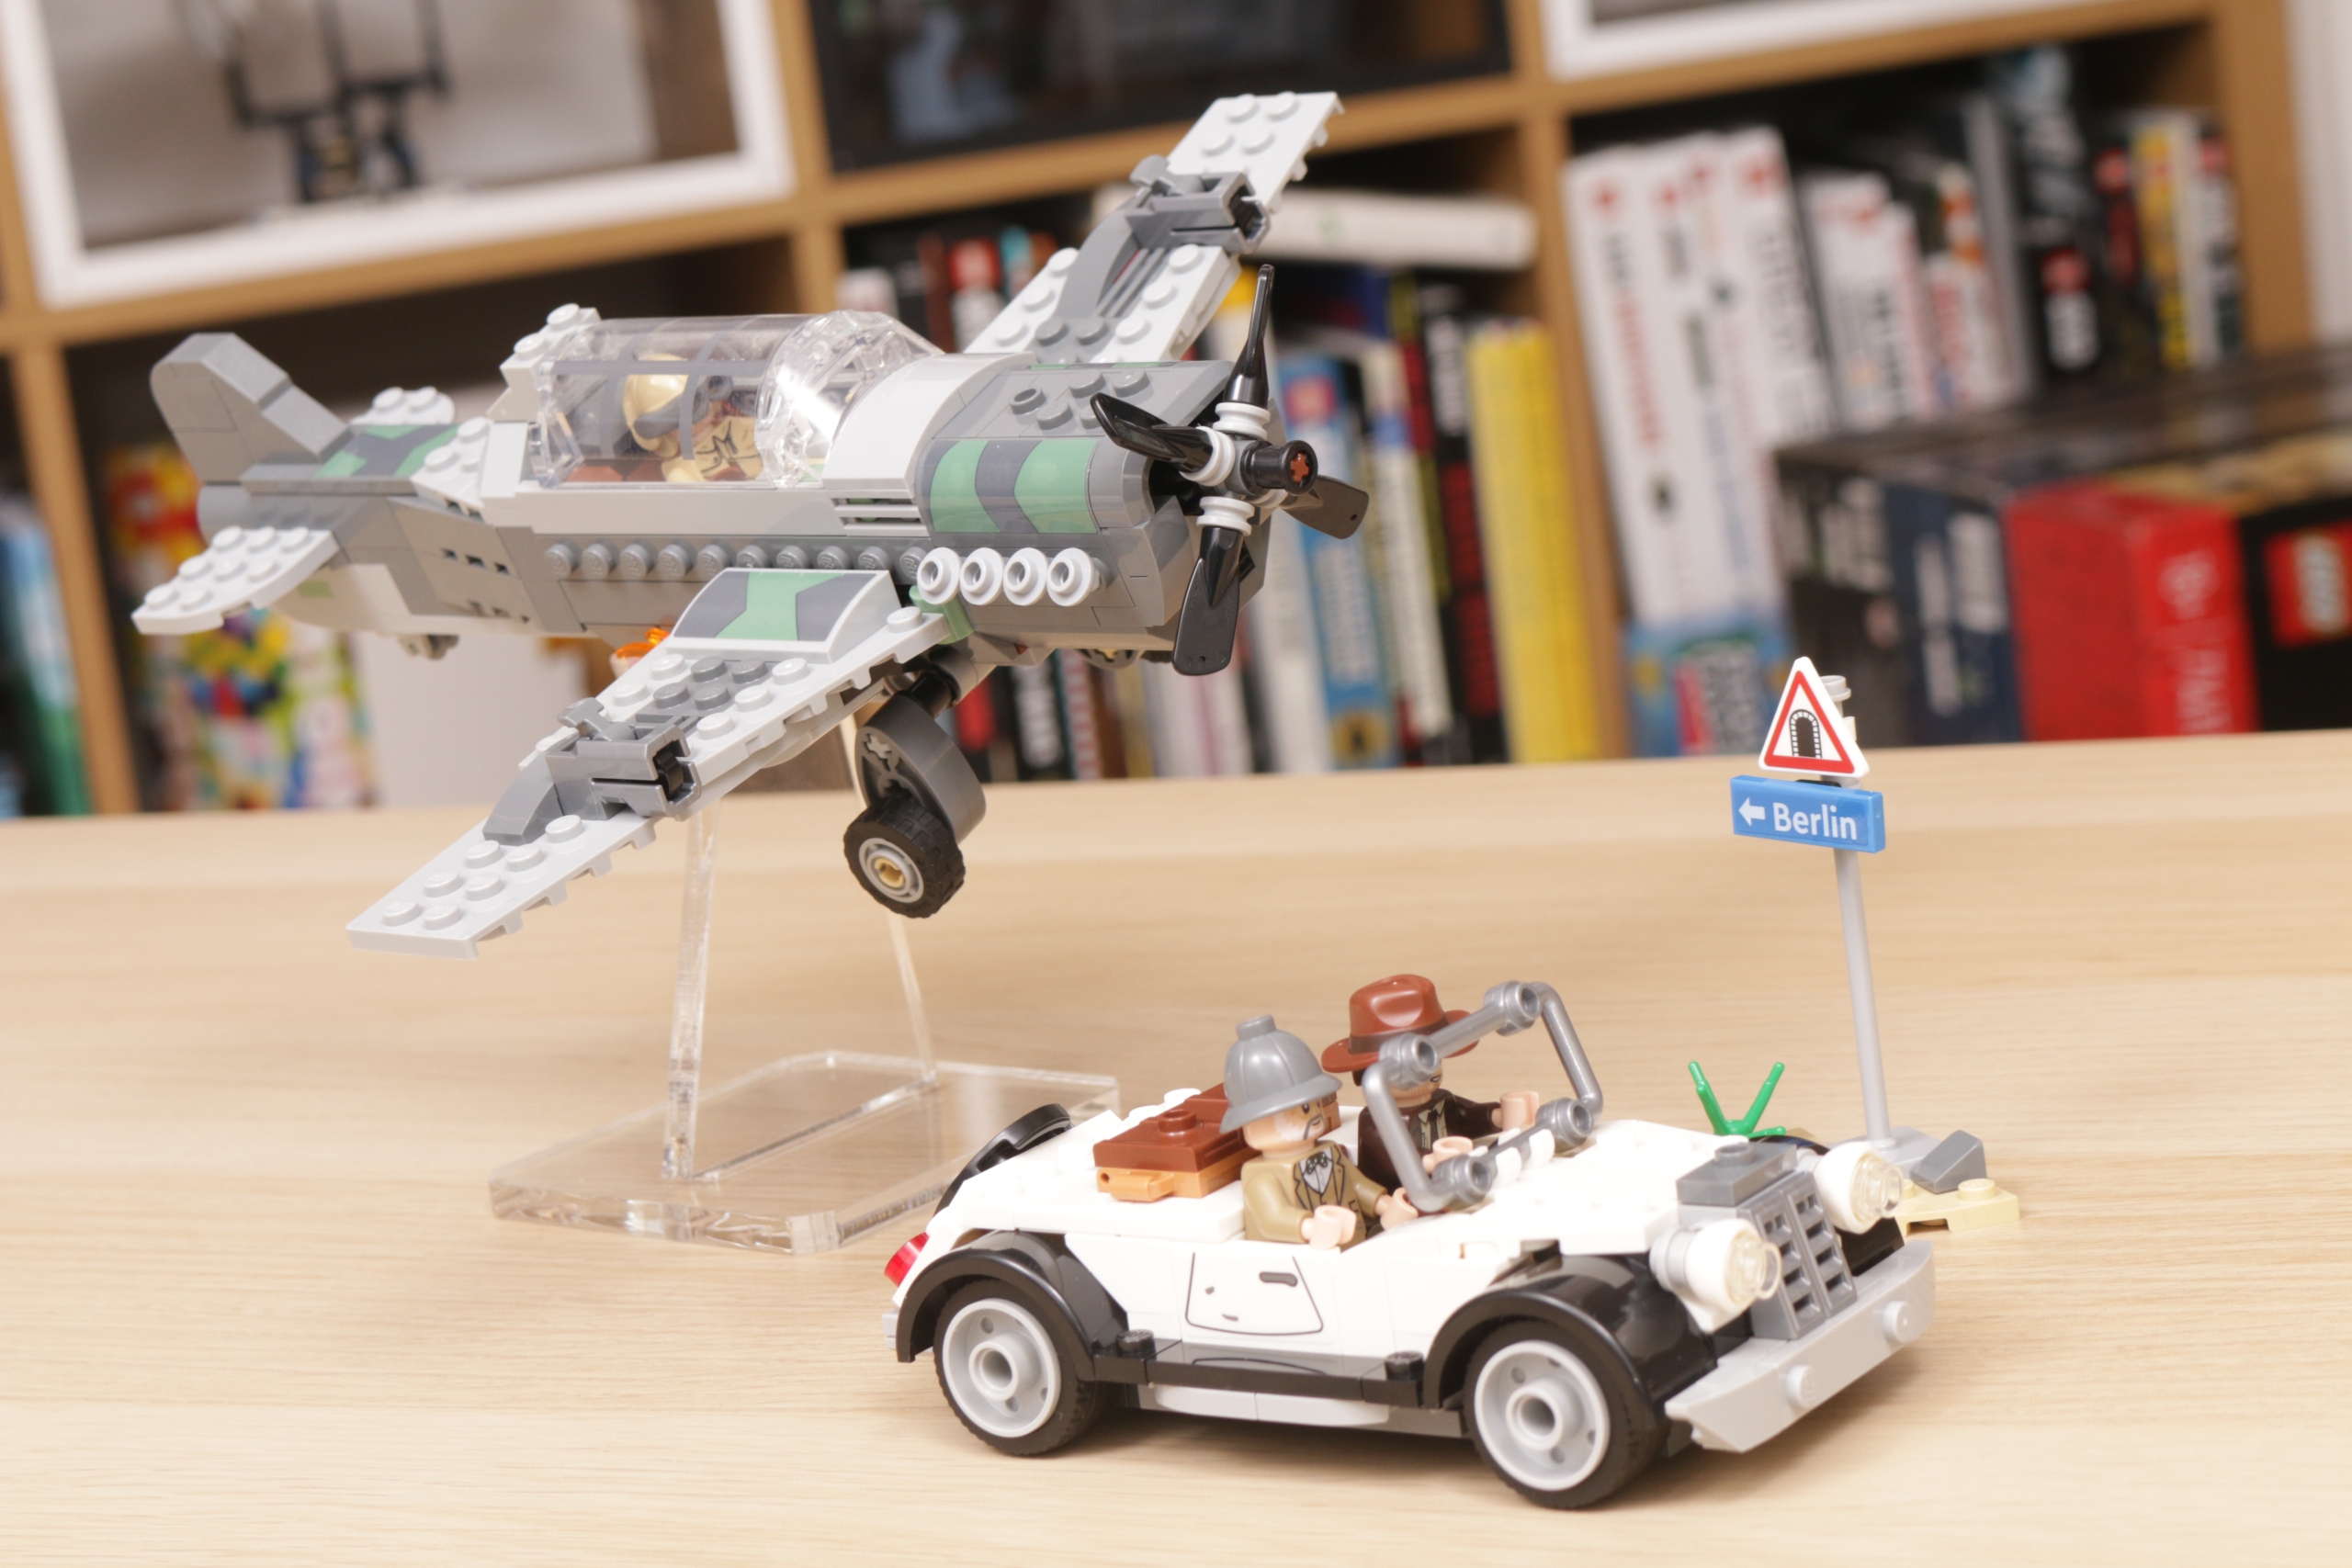 Fighter Plane Chase 77012, LEGO® Indiana Jones™